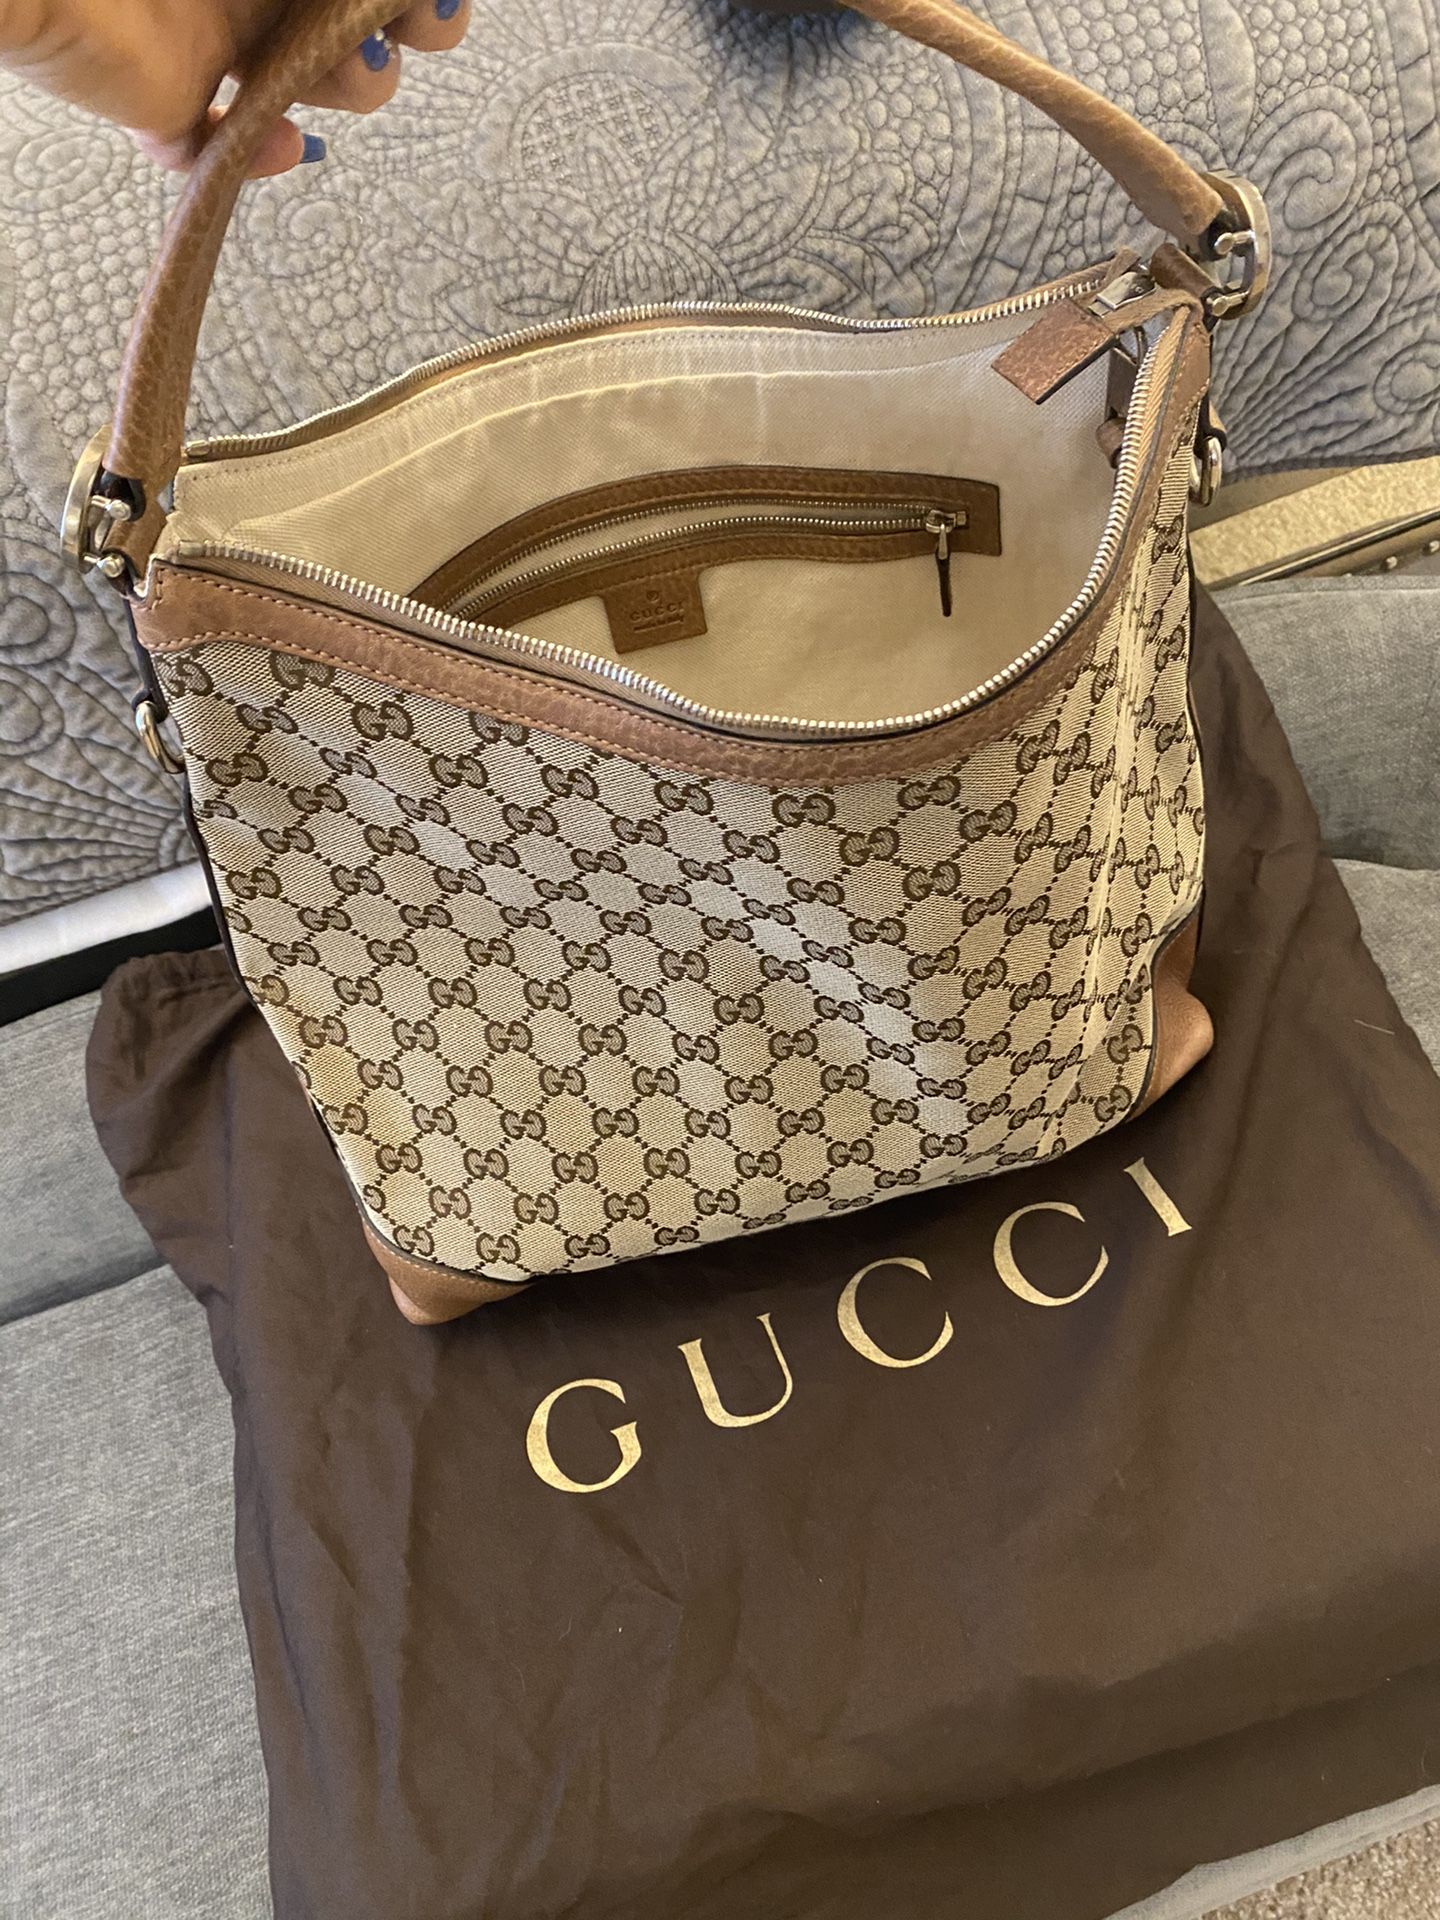 Gucci canvas hobo bag